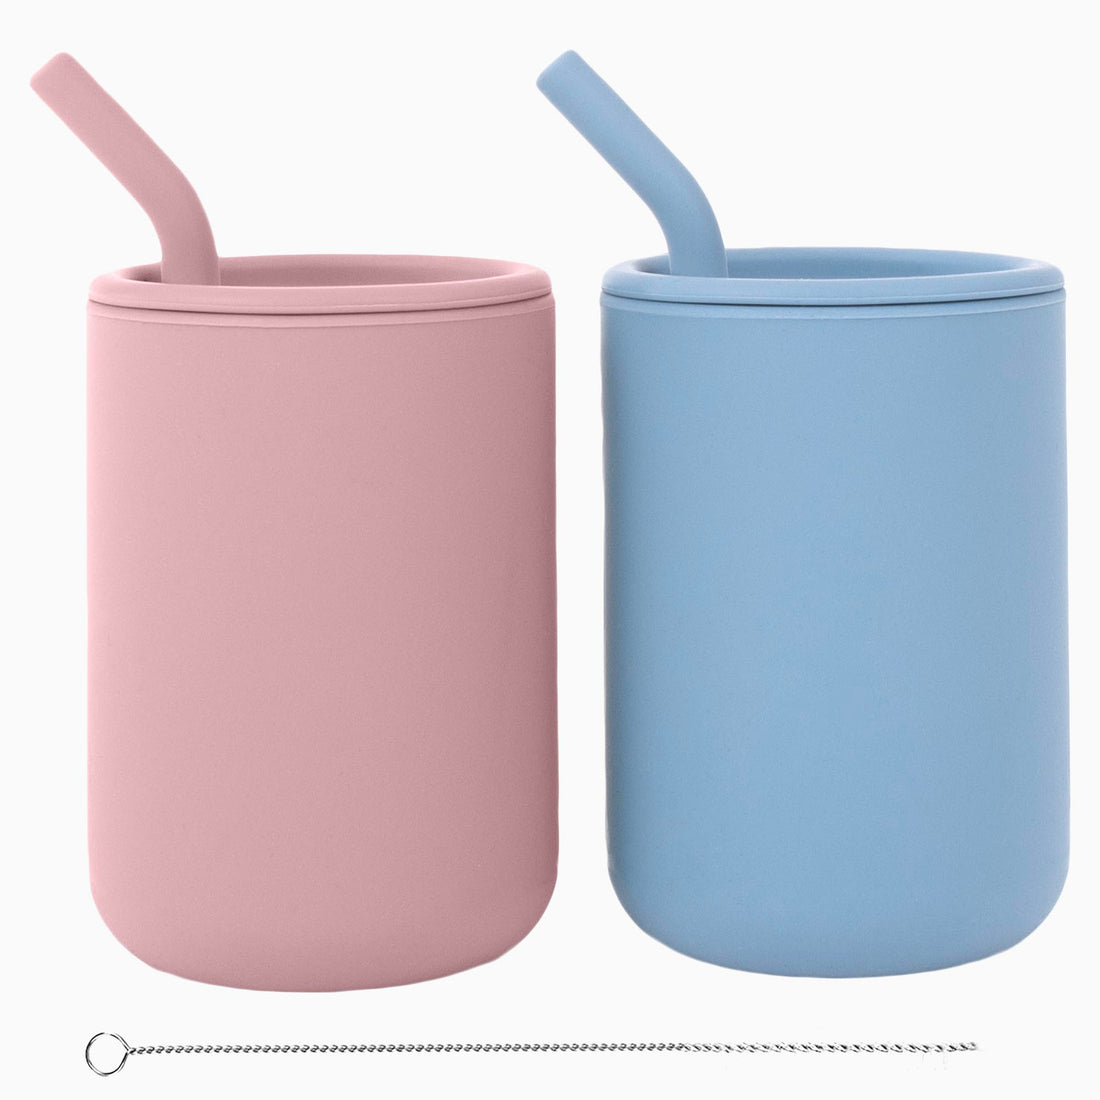 Cup accessories, cup lids, straws, glass straw, plastic straw